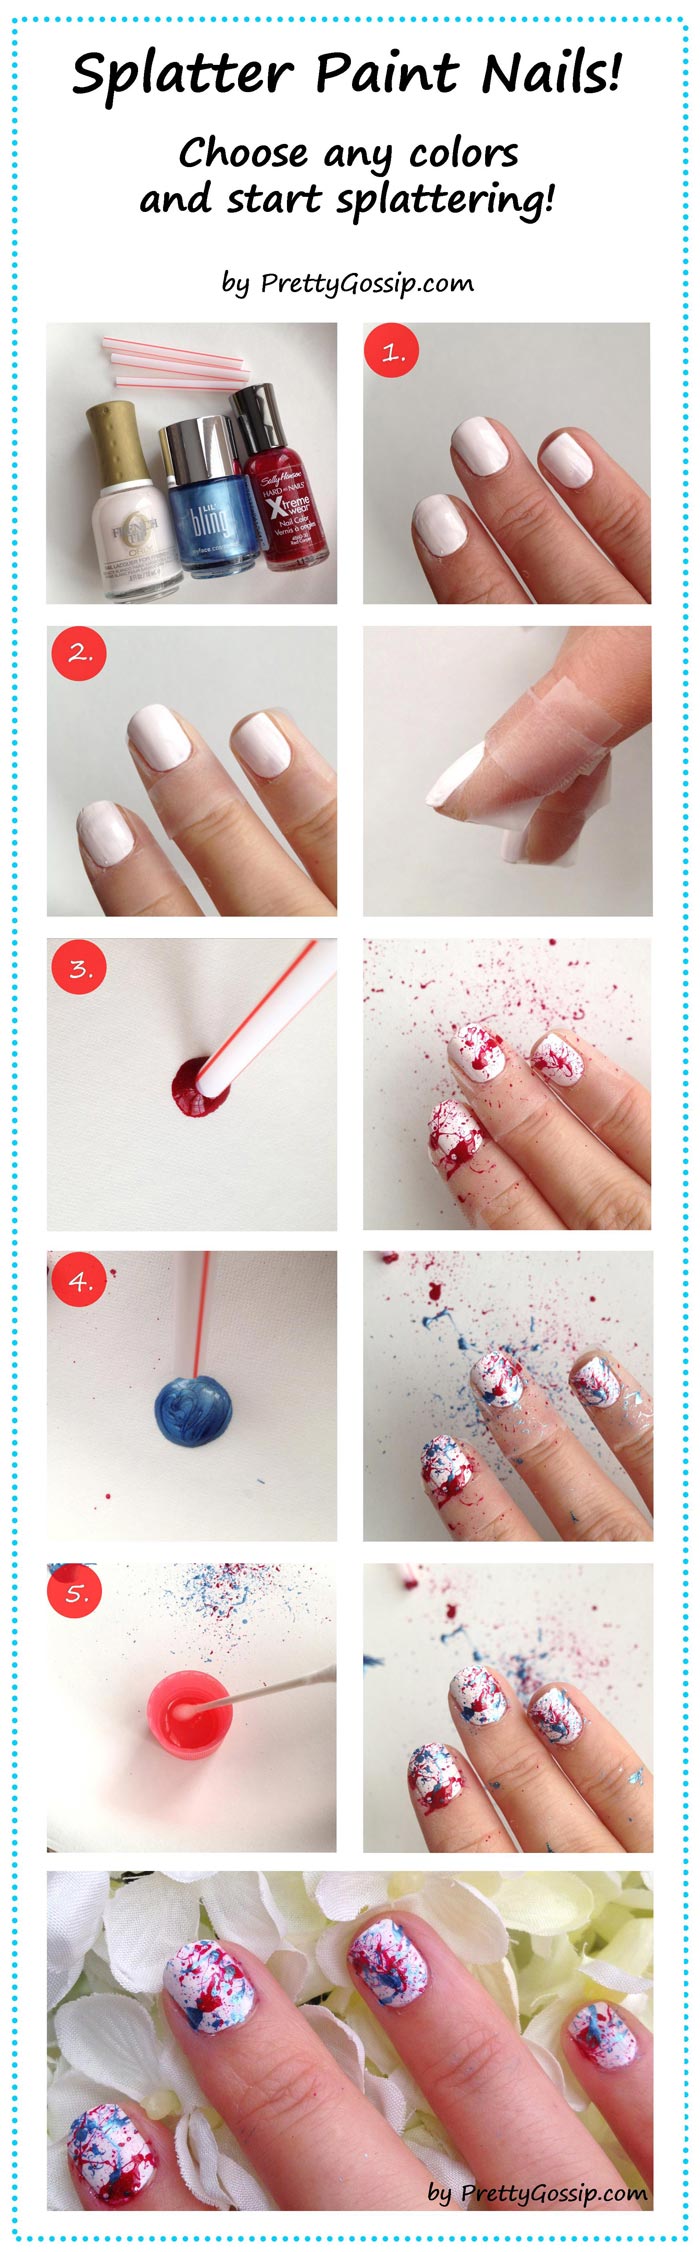 10 Easy Step By Nail Art Tutorials